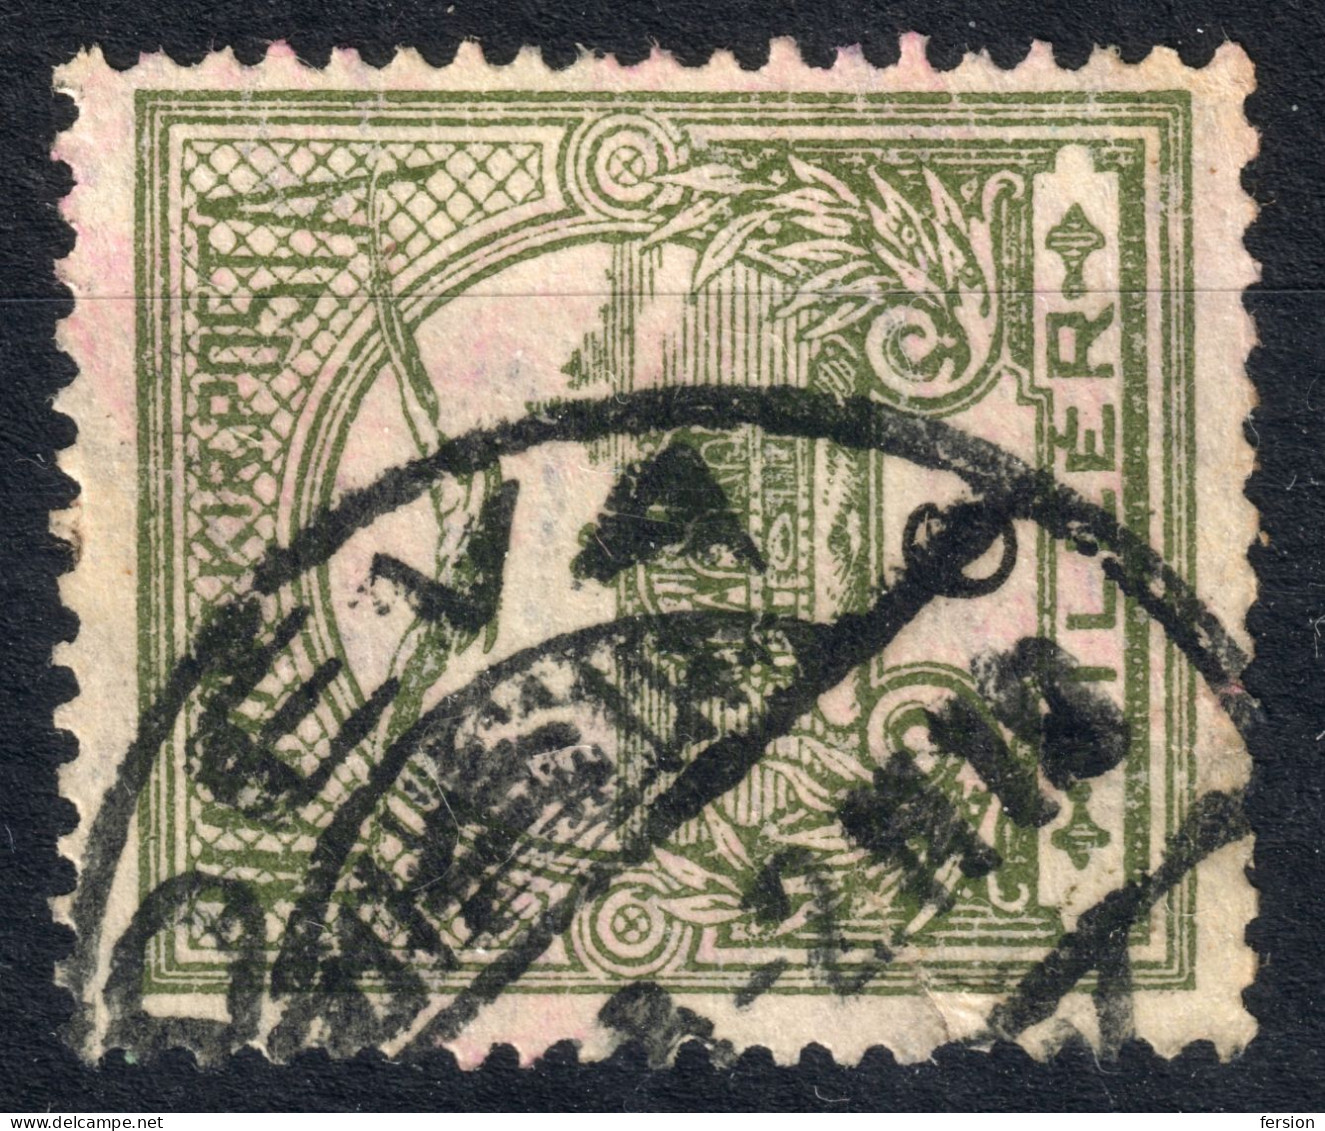 DÉVA DEVA Postmark / TURUL Crown 1910's Hungary Romania Transylvania Hunyad County KuK - 6 Fill - Siebenbürgen (Transsylvanien)